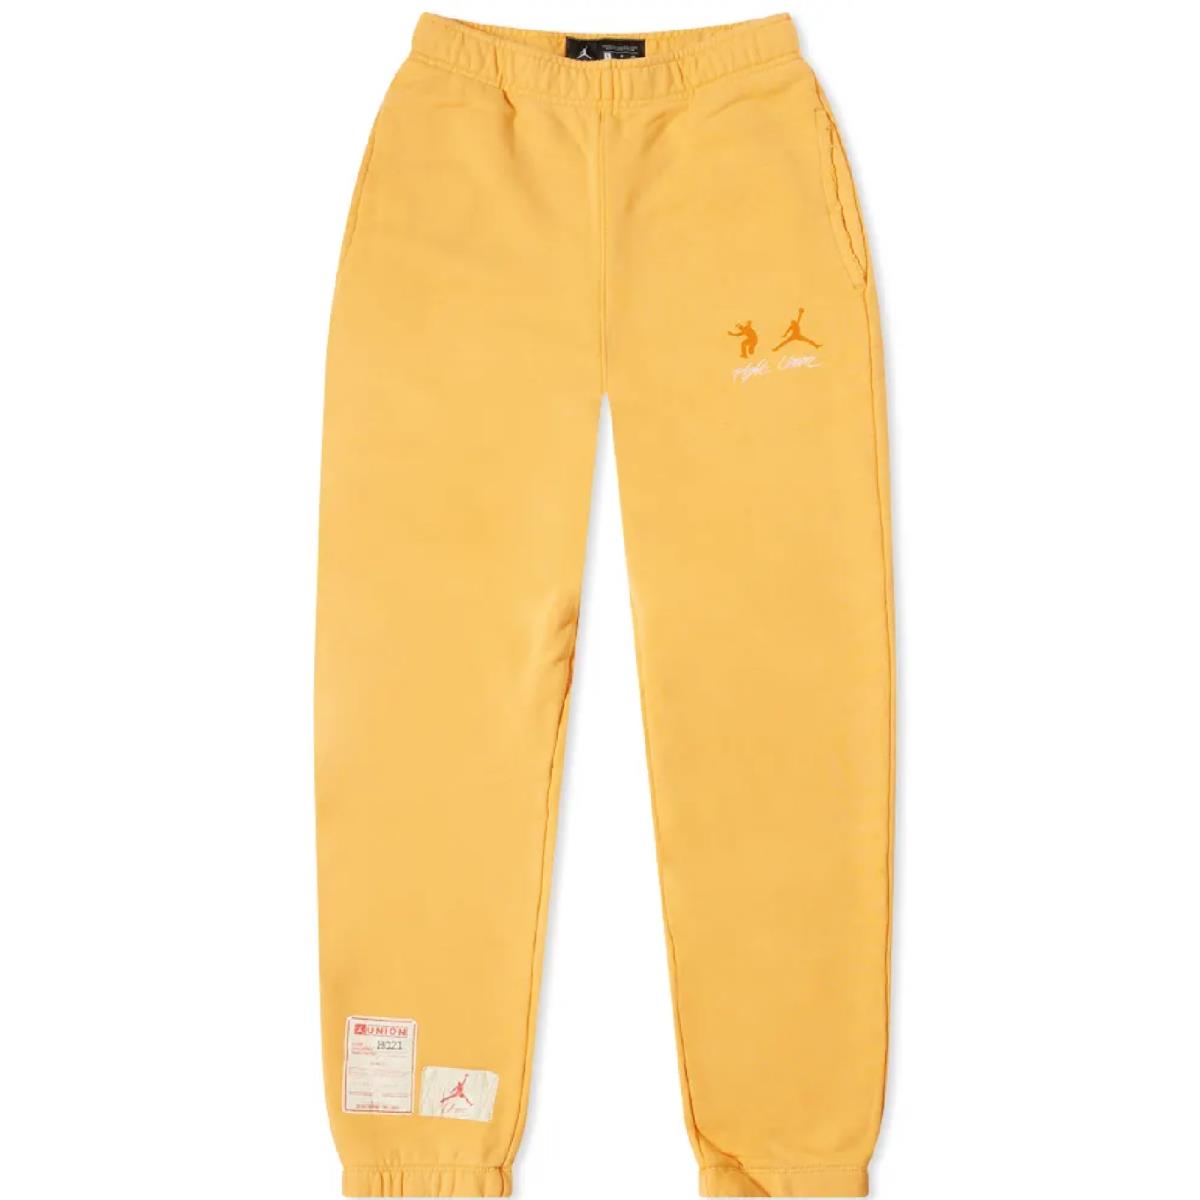 Nike Jordan X Union Fleece Pant Size S Small Sport Gold Yellow IV 2